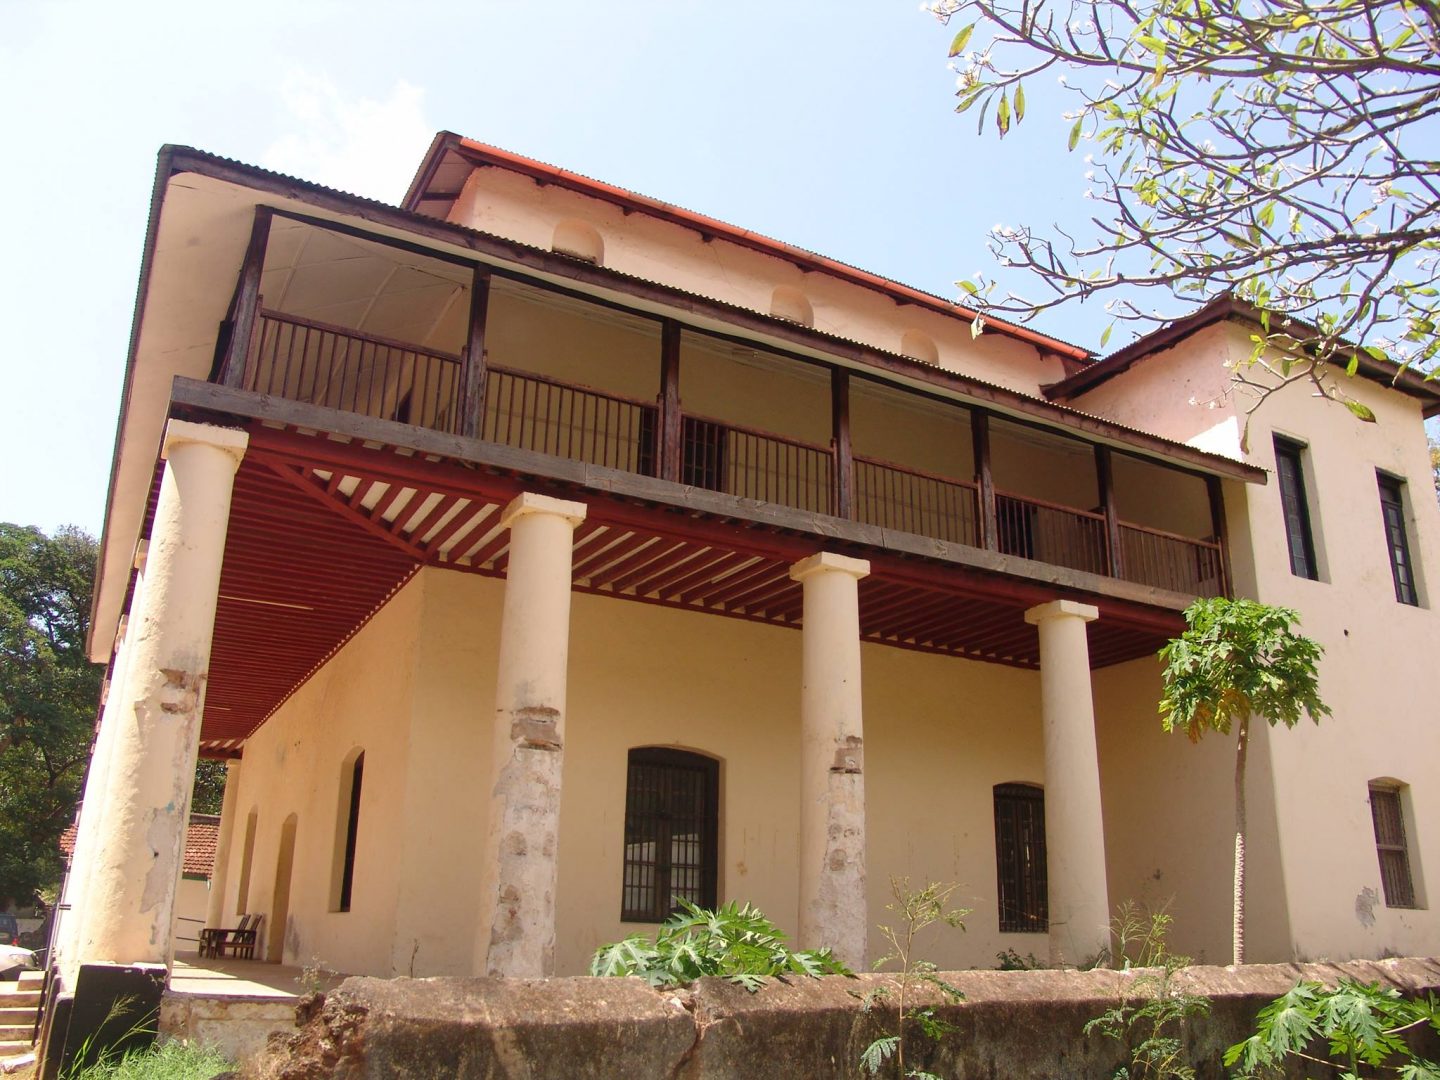 Malindi Museum, Kenya